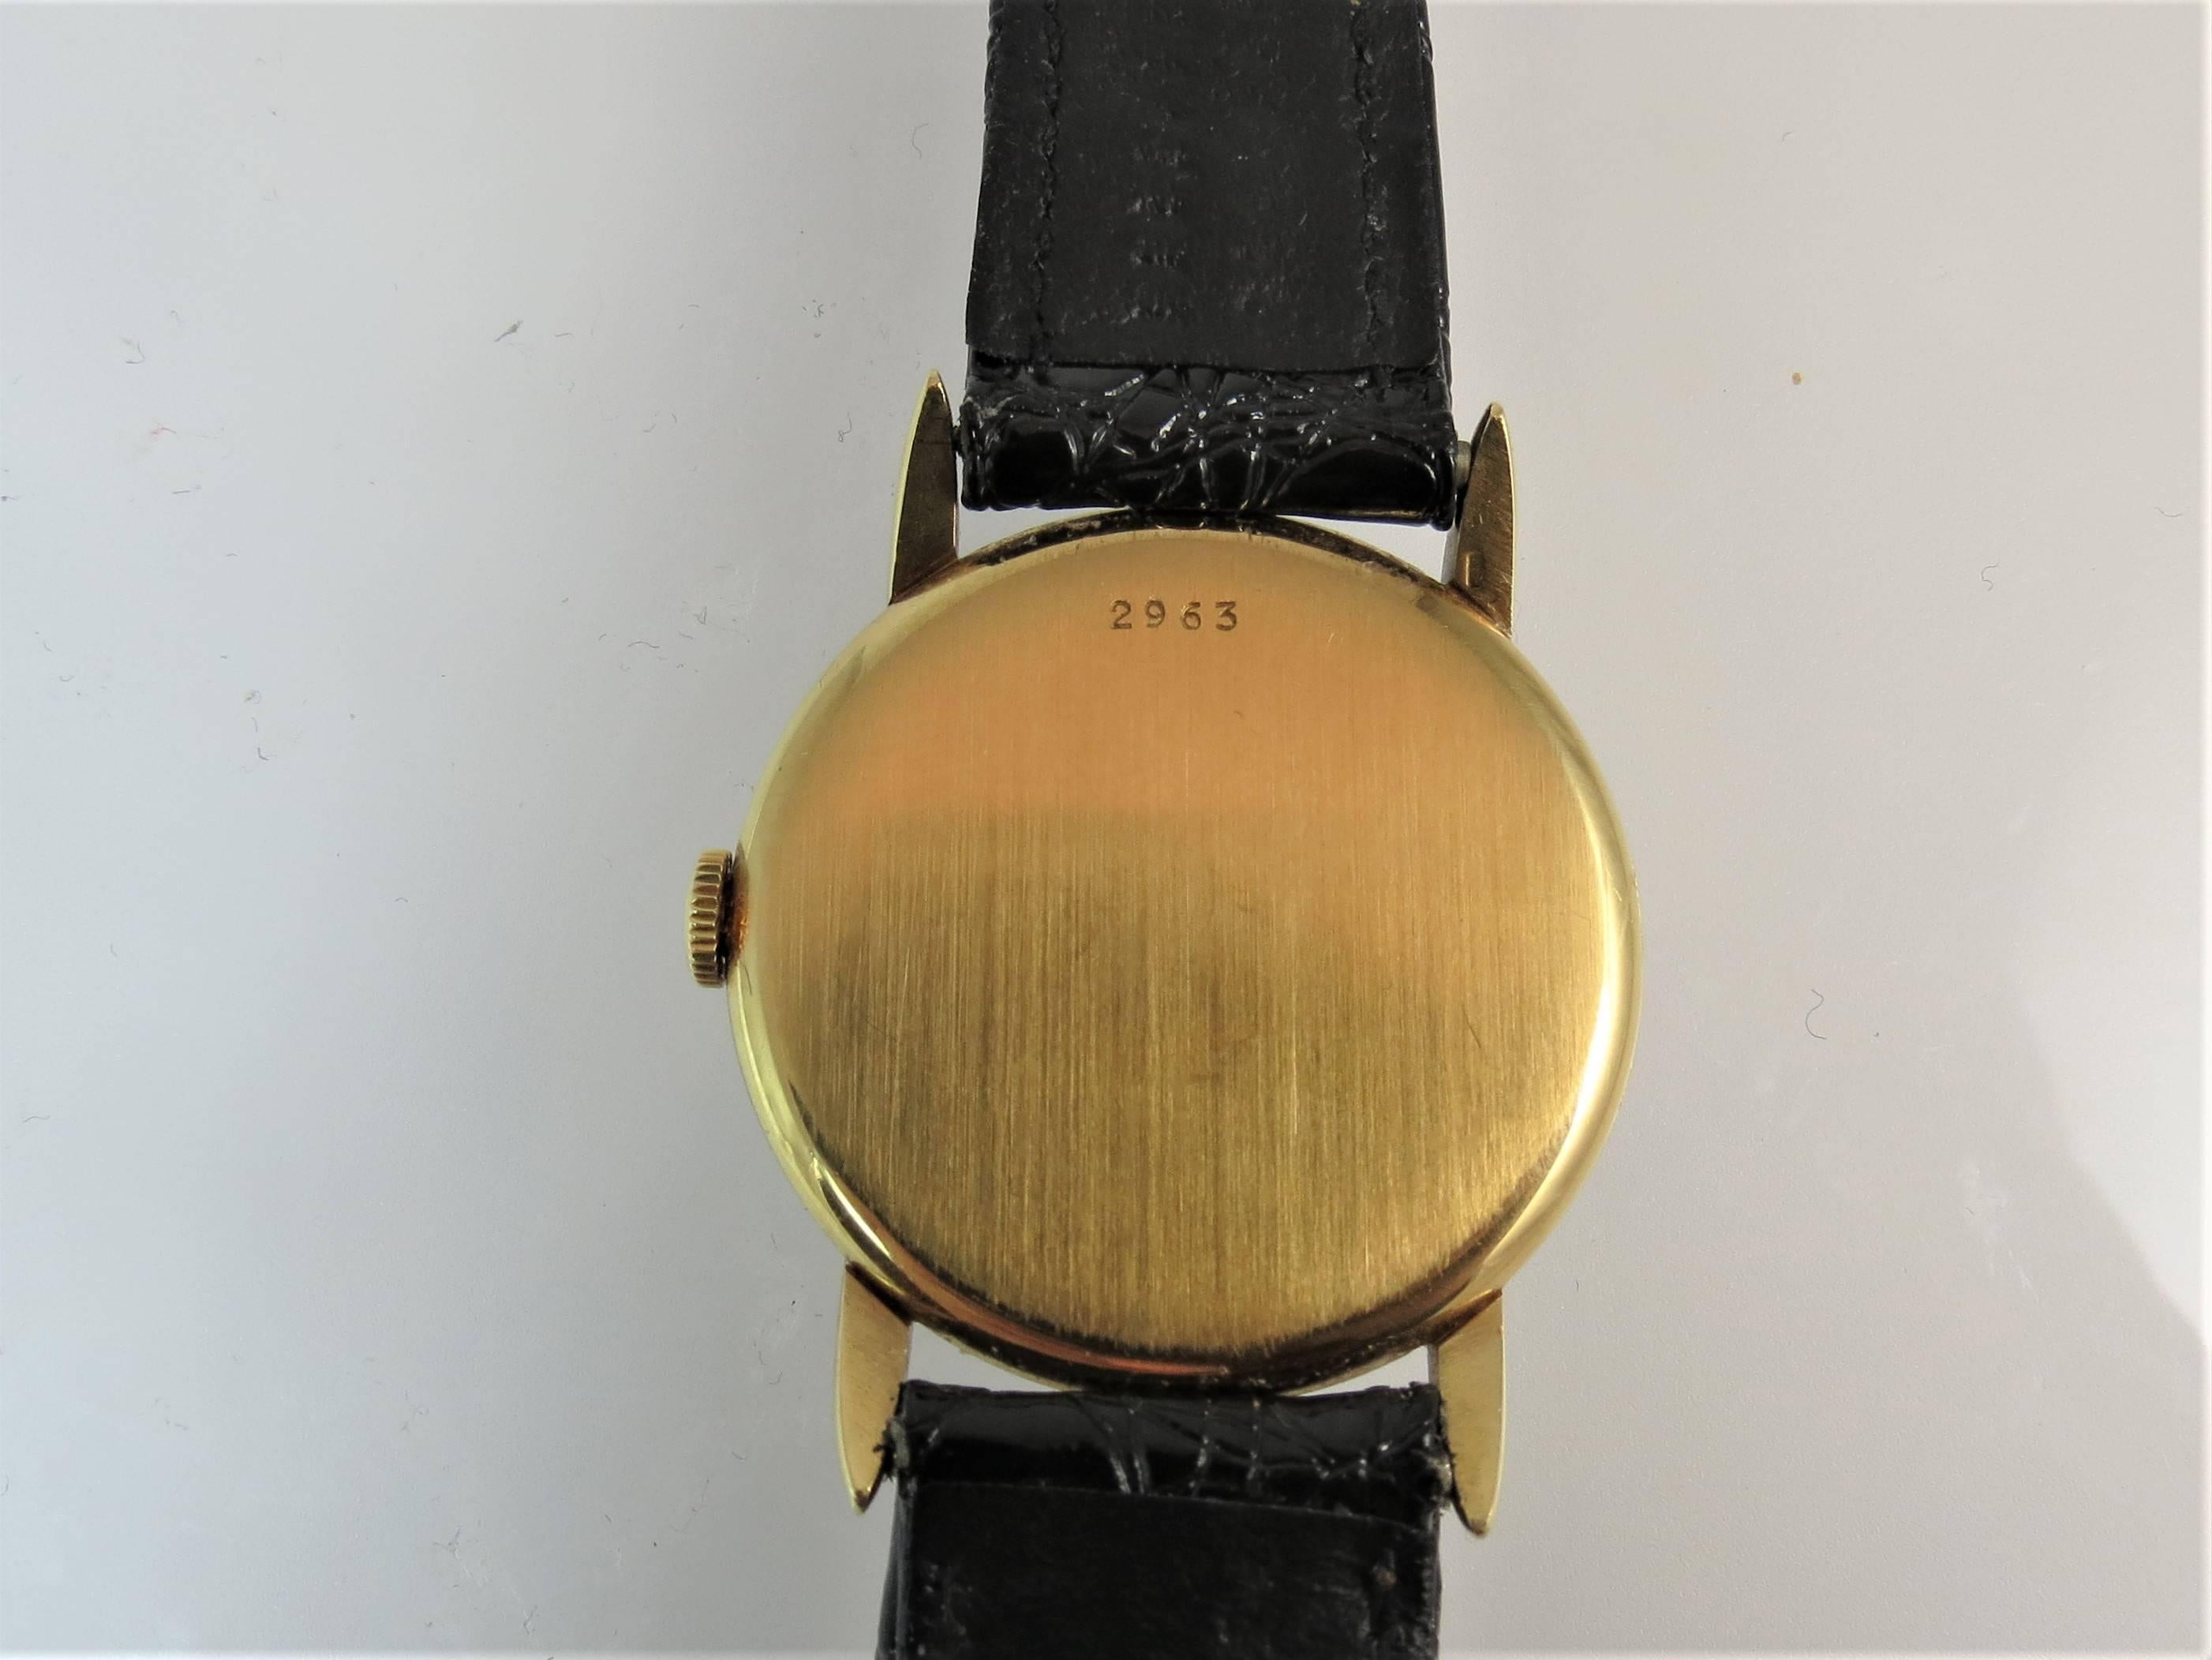 Contemporary Audemars Piguet Yellow Gold Manual Wind Wristwatch, circa 1943